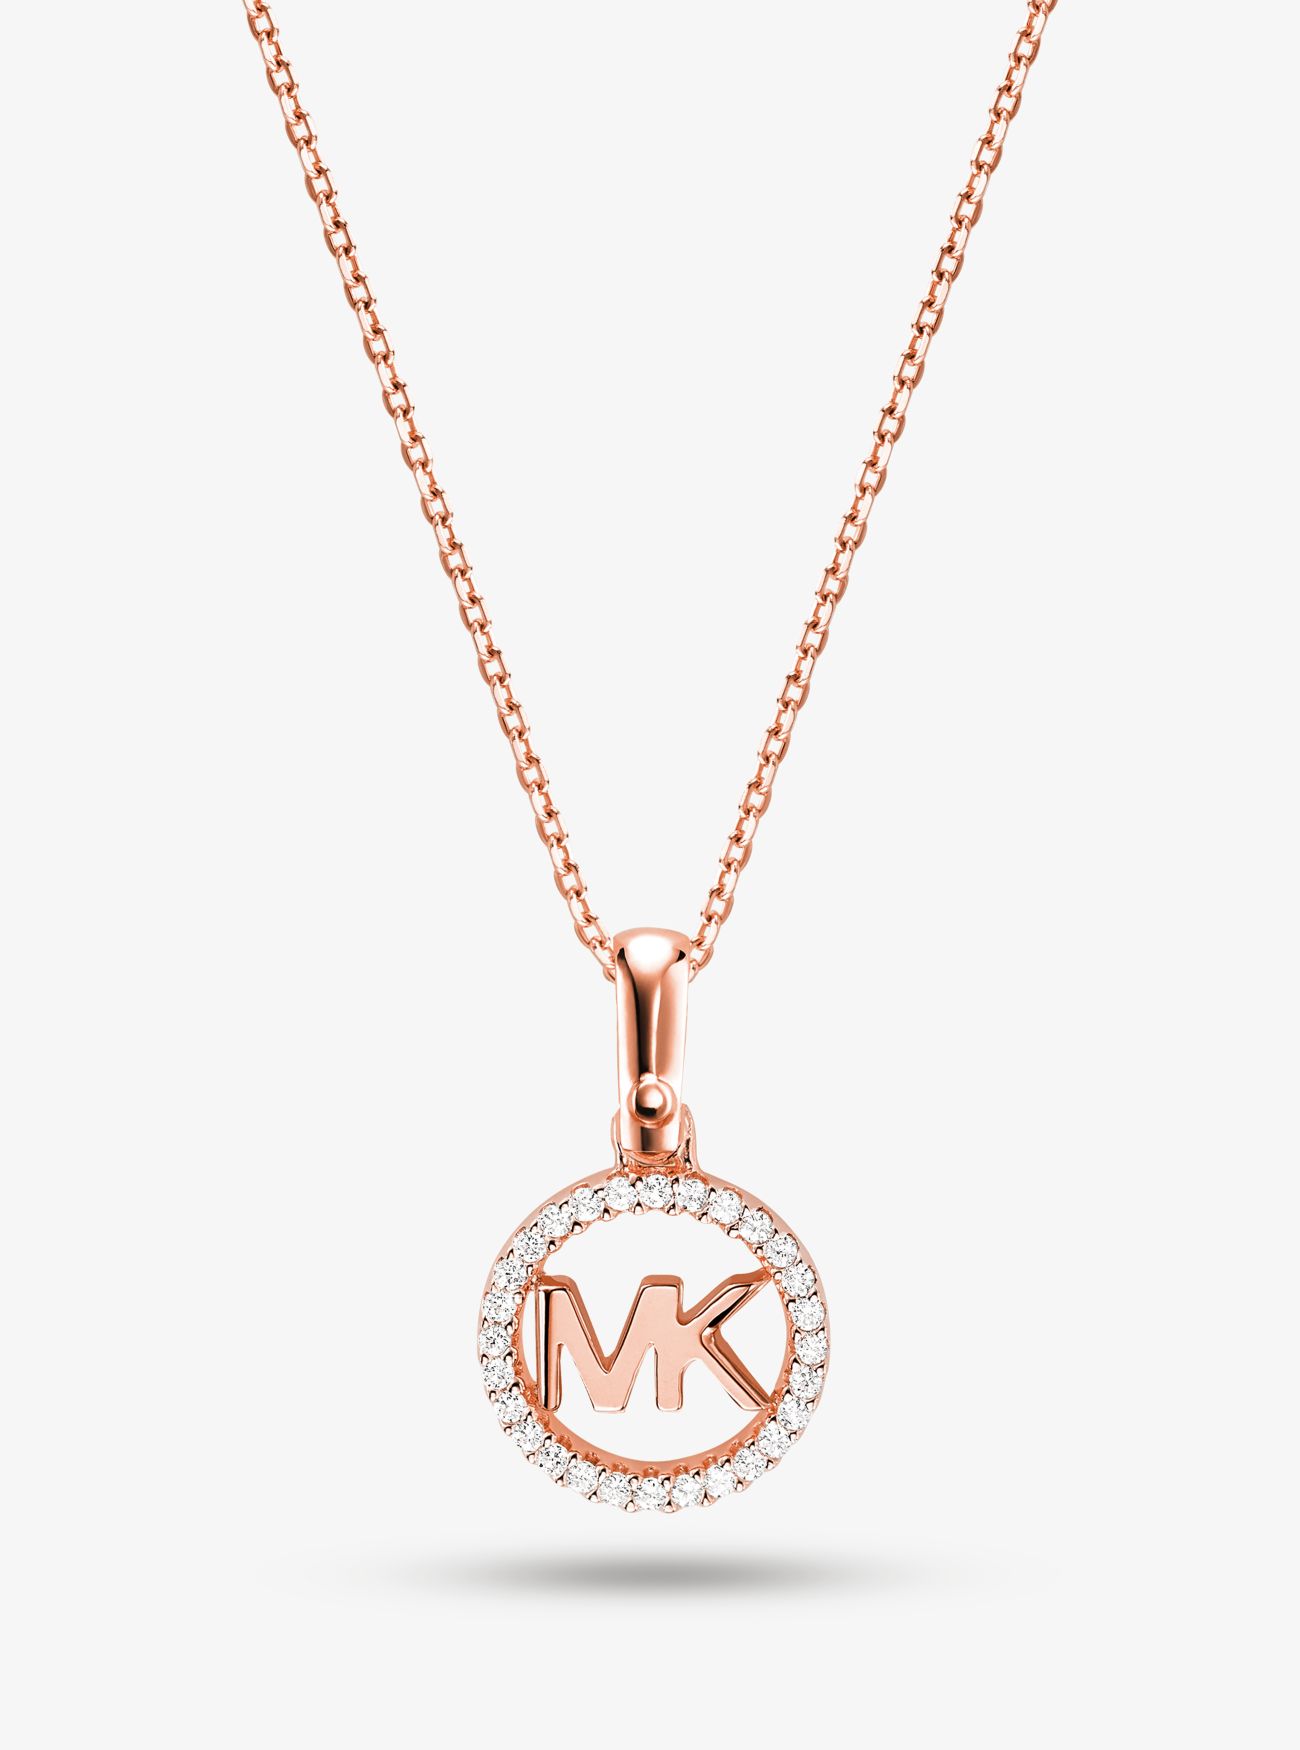 MK Precious Metal-Plated Pavé Logo Charm Necklace - Rose Gold - Michael Kors